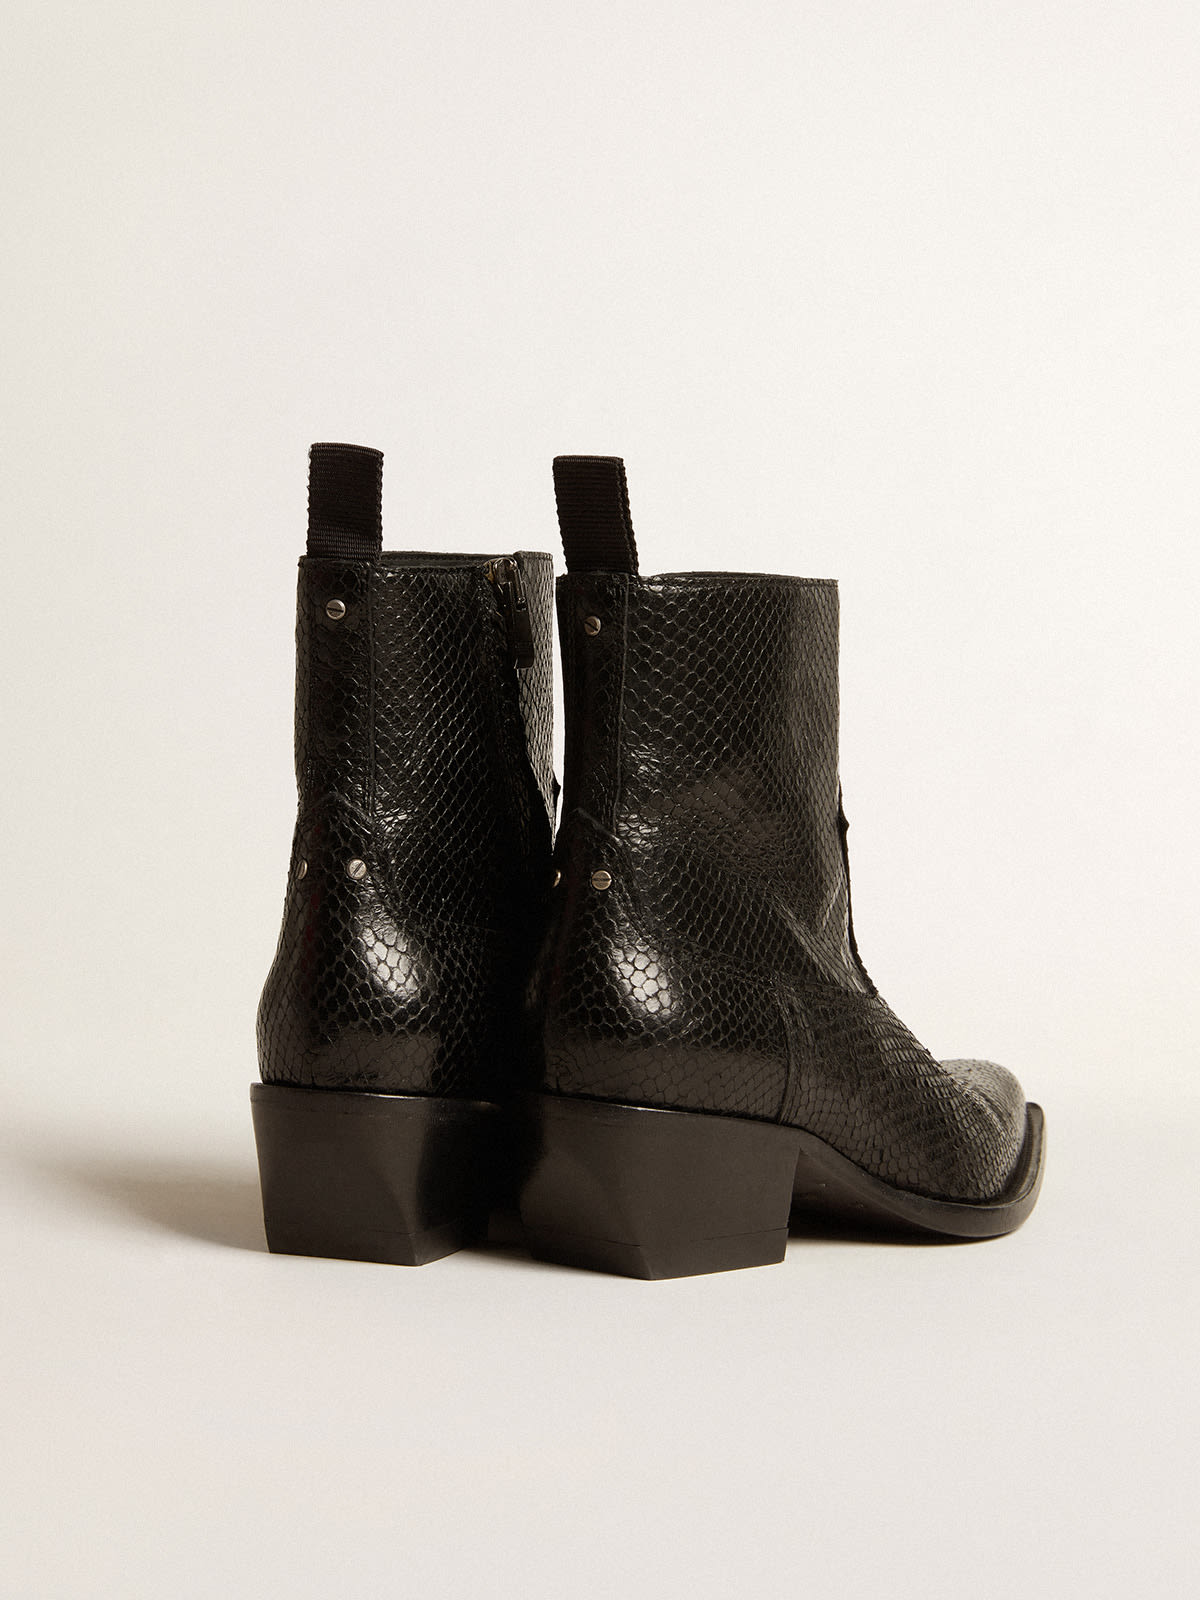 Low Debbie boots in black snake-print leather | Golden Goose